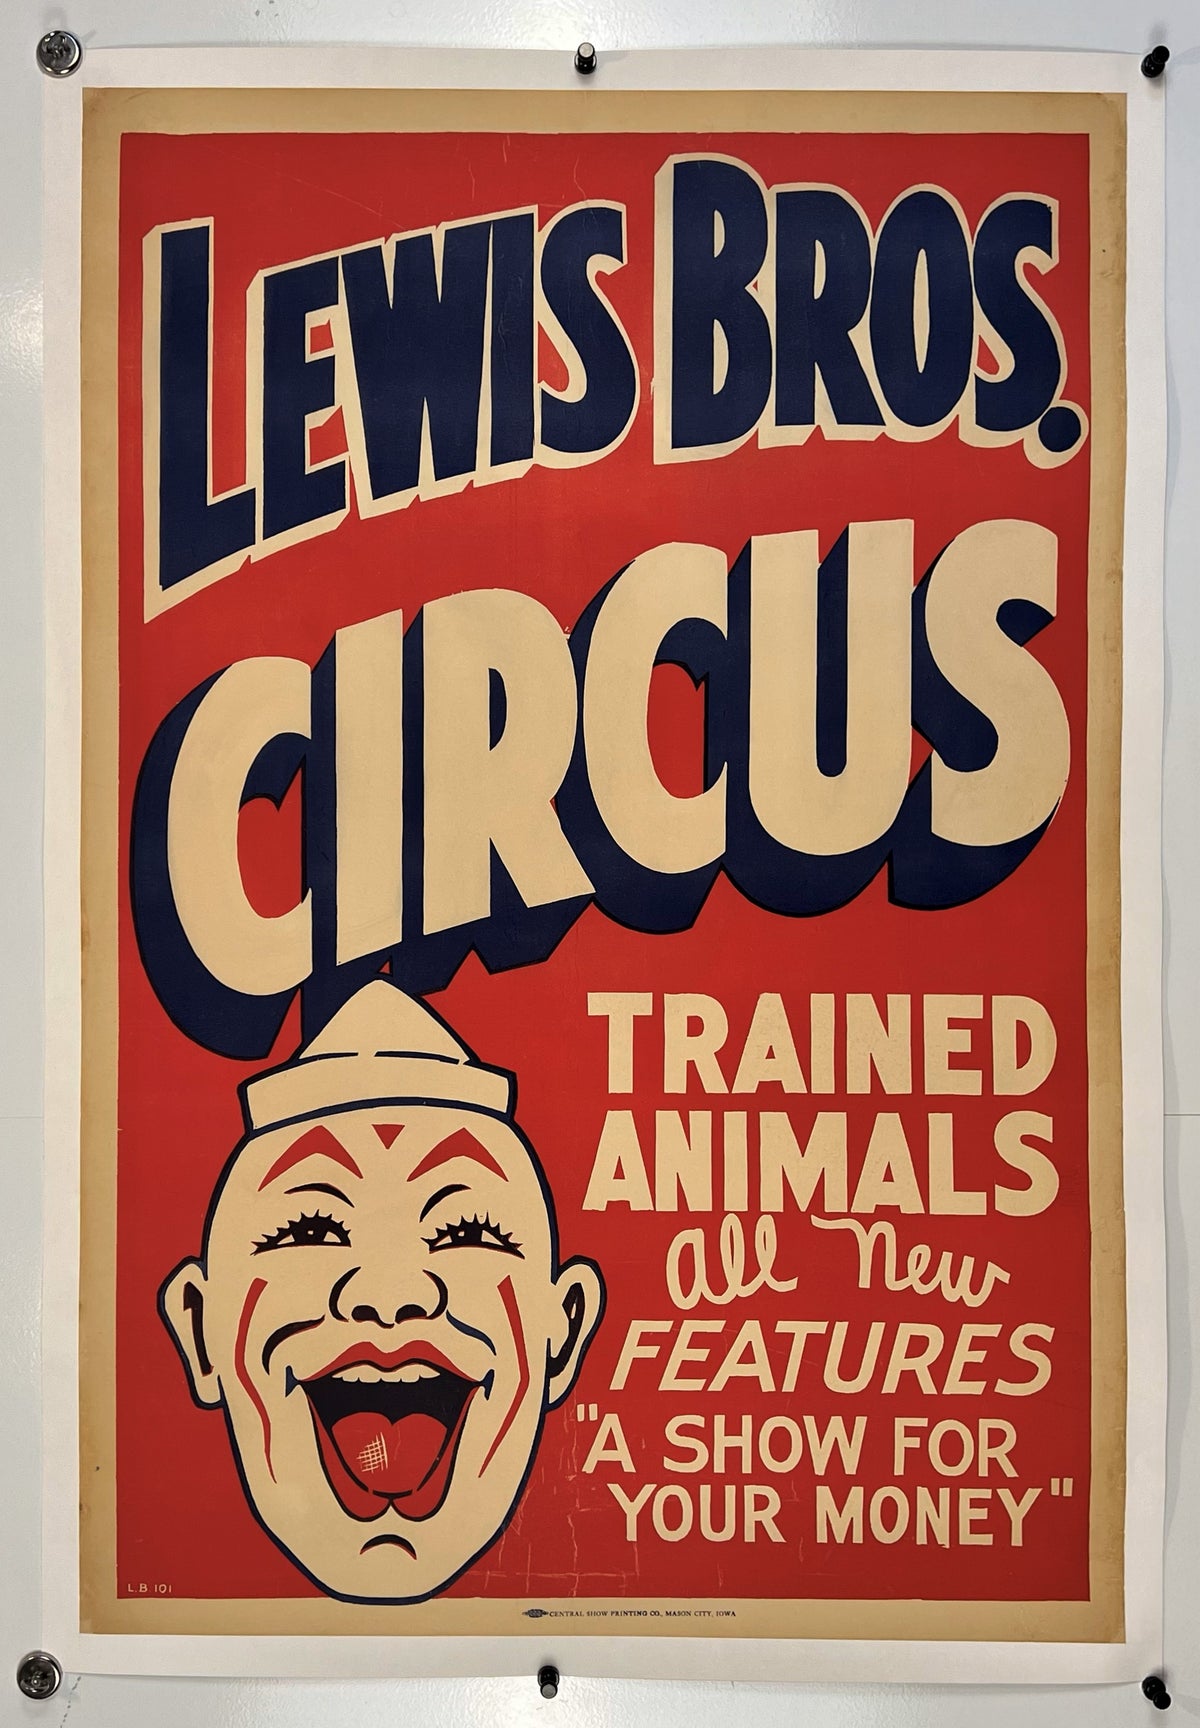 Lewis Bros Circus - Authentic Vintage Poster